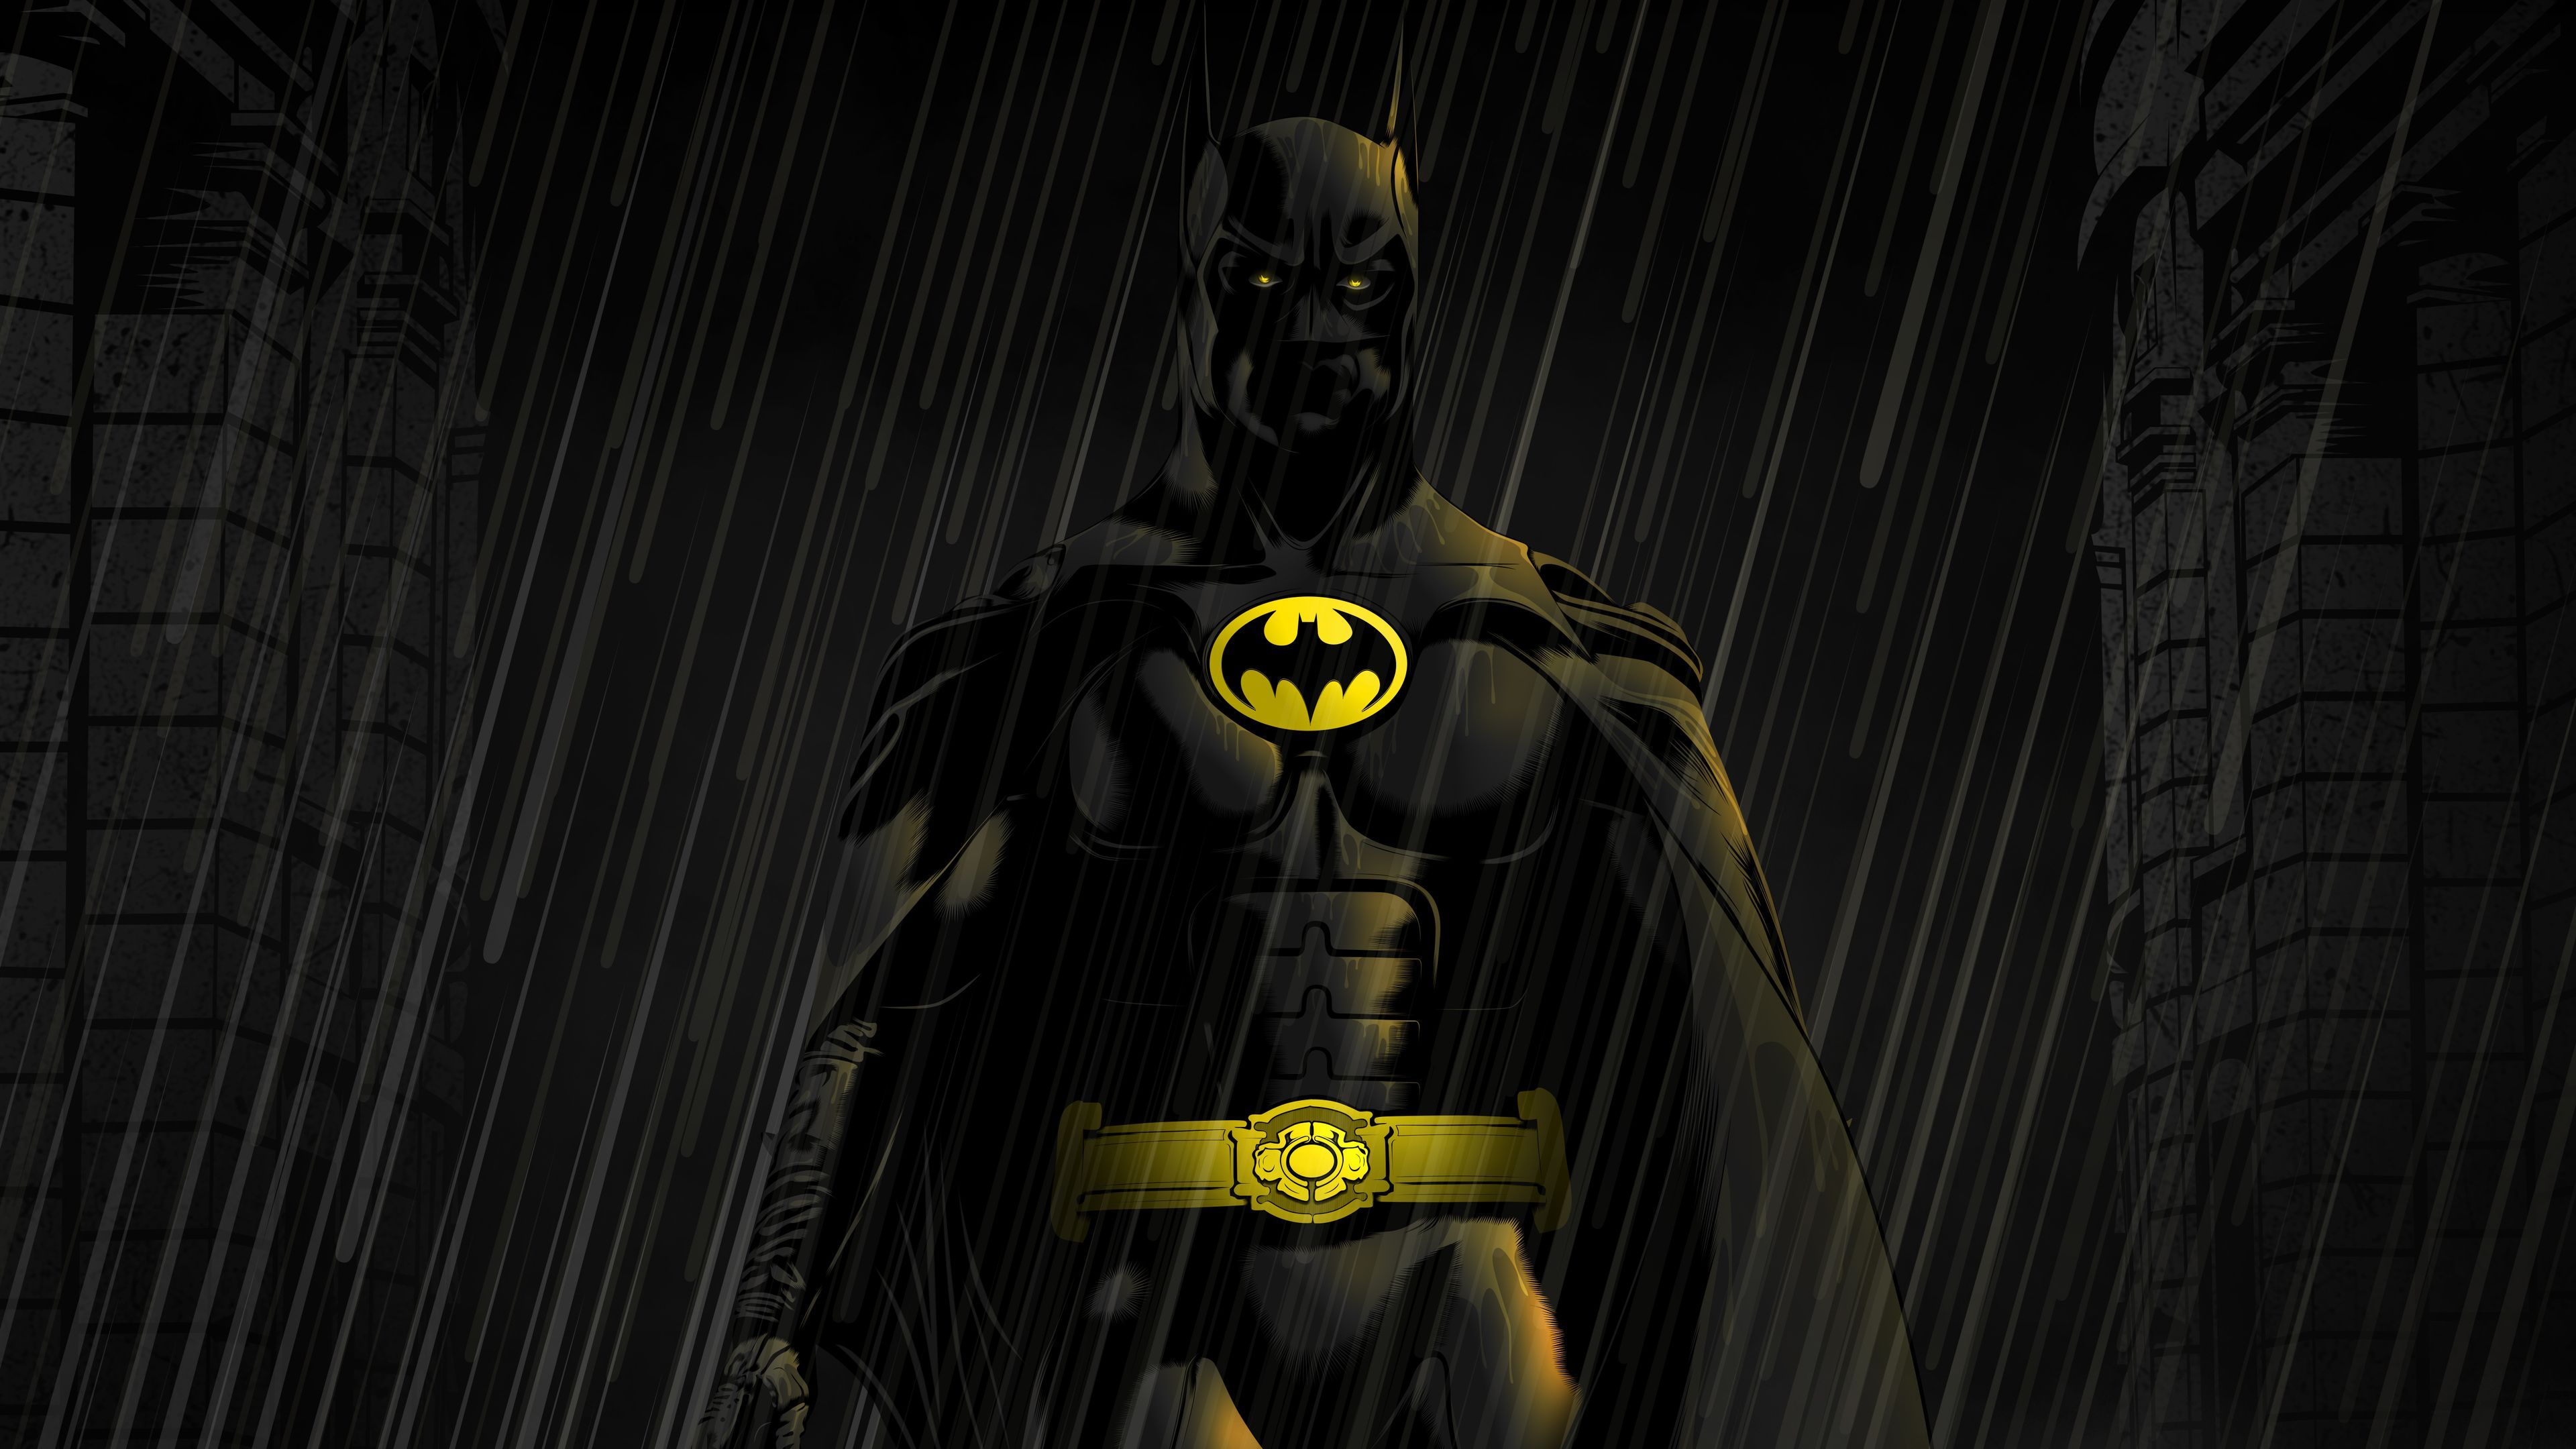 Batman Michael Keaton Superheroes Wallpaper, Hd Wallpaper, Digital Art Wallpaper, Batman Wallpaper, Artwork Wallpaper, 4. Batman Wallpaper, Superhero, Batman